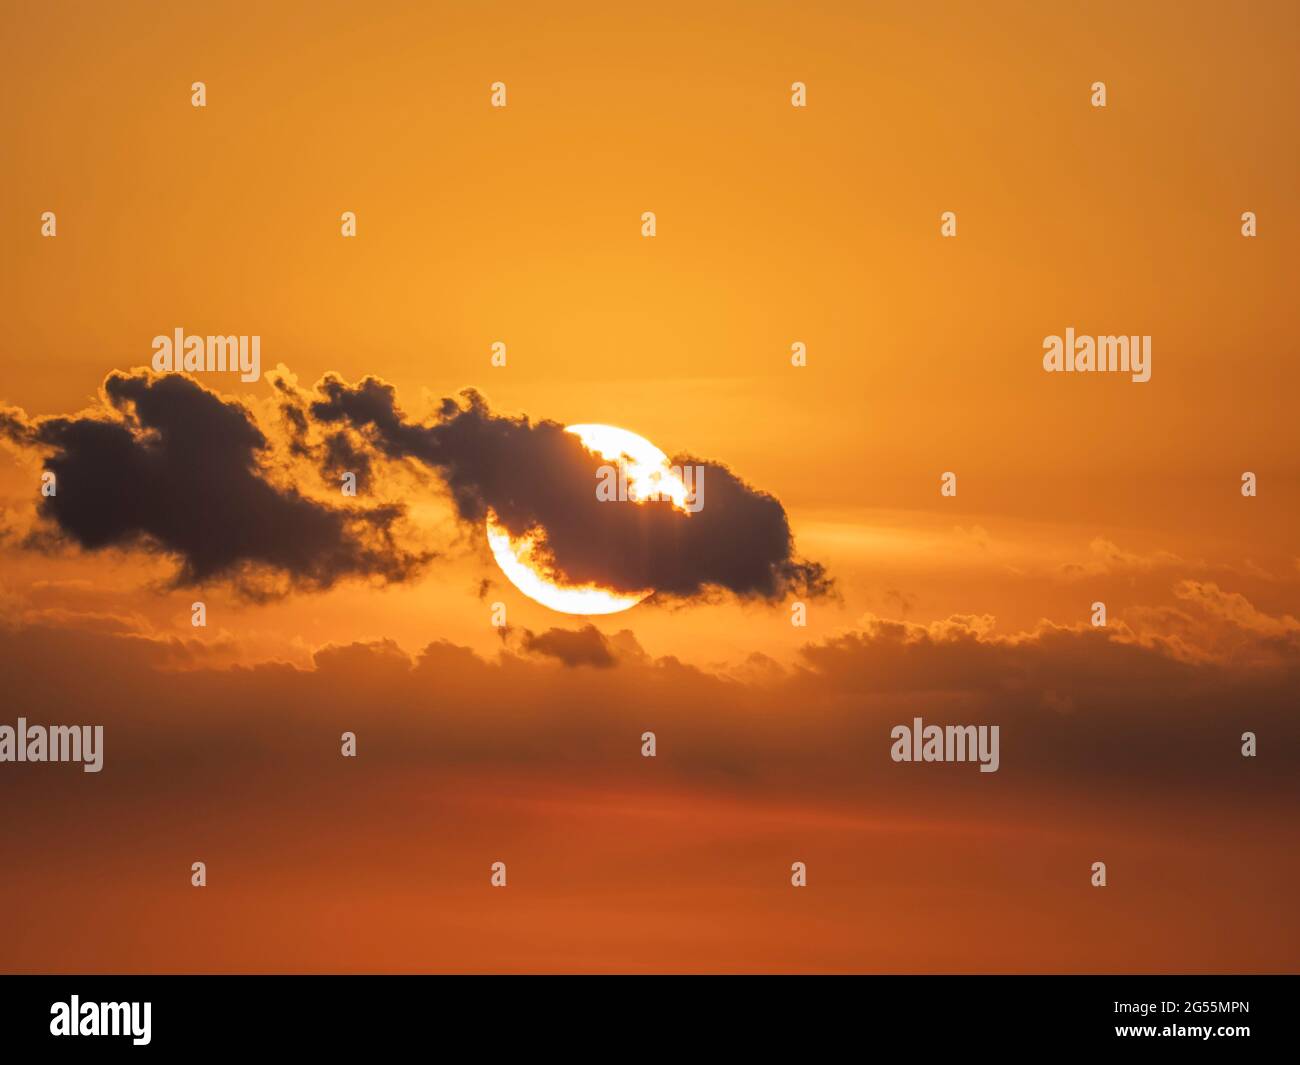 Sun behind small clouds in orange sky near sunse Stock Photo